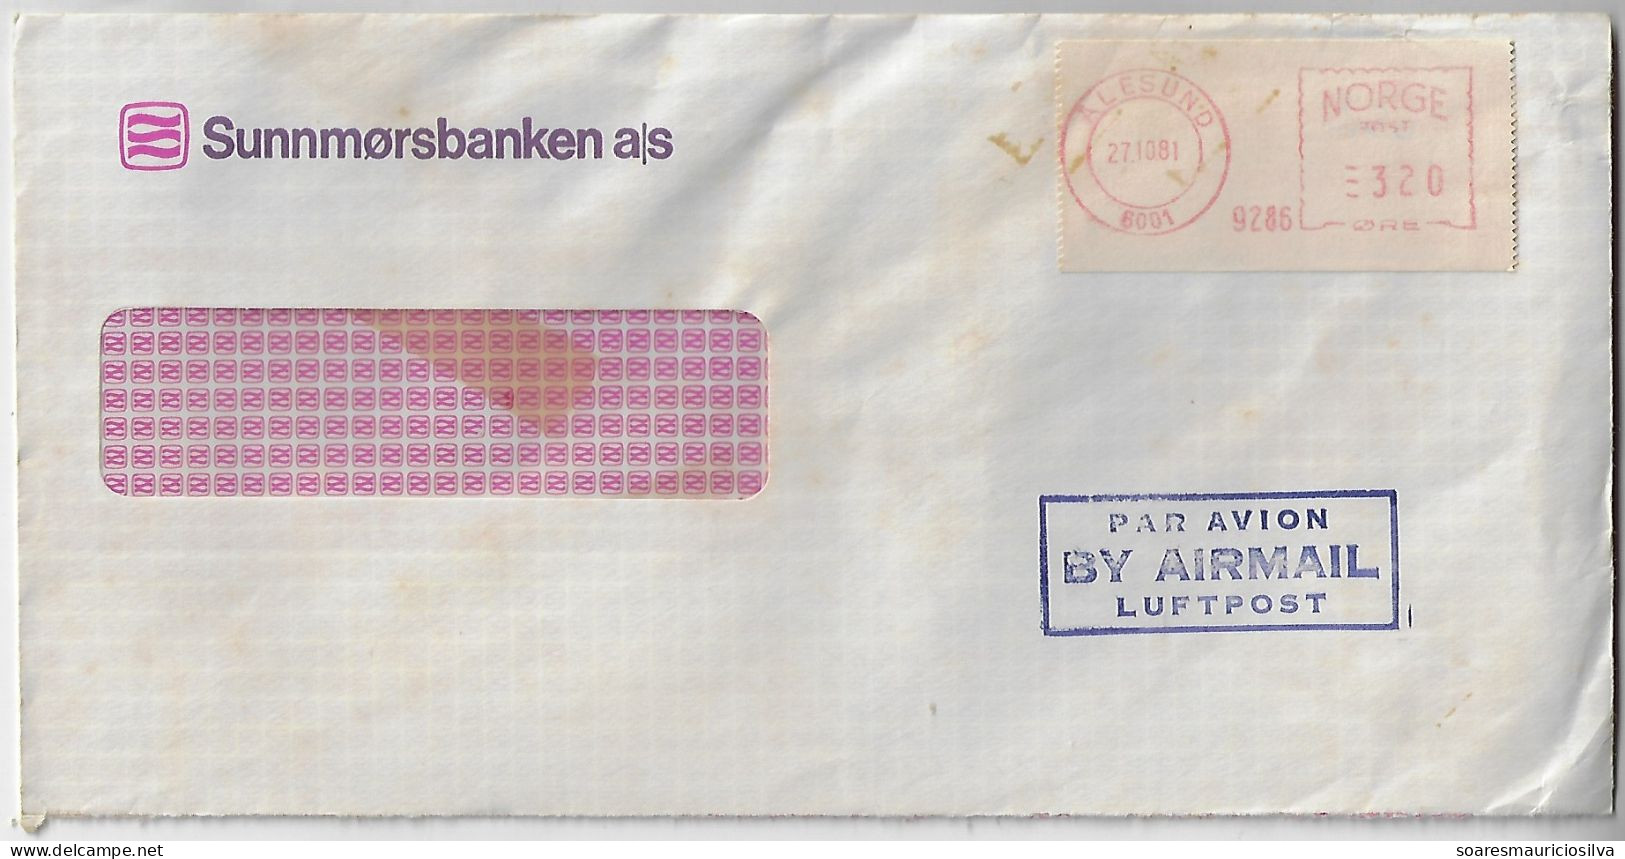 Norway 1981 Sunnmørsbanken airmail Cover Sent From Alesund Meter Stamp Pitney Bowes "5000" - Briefe U. Dokumente